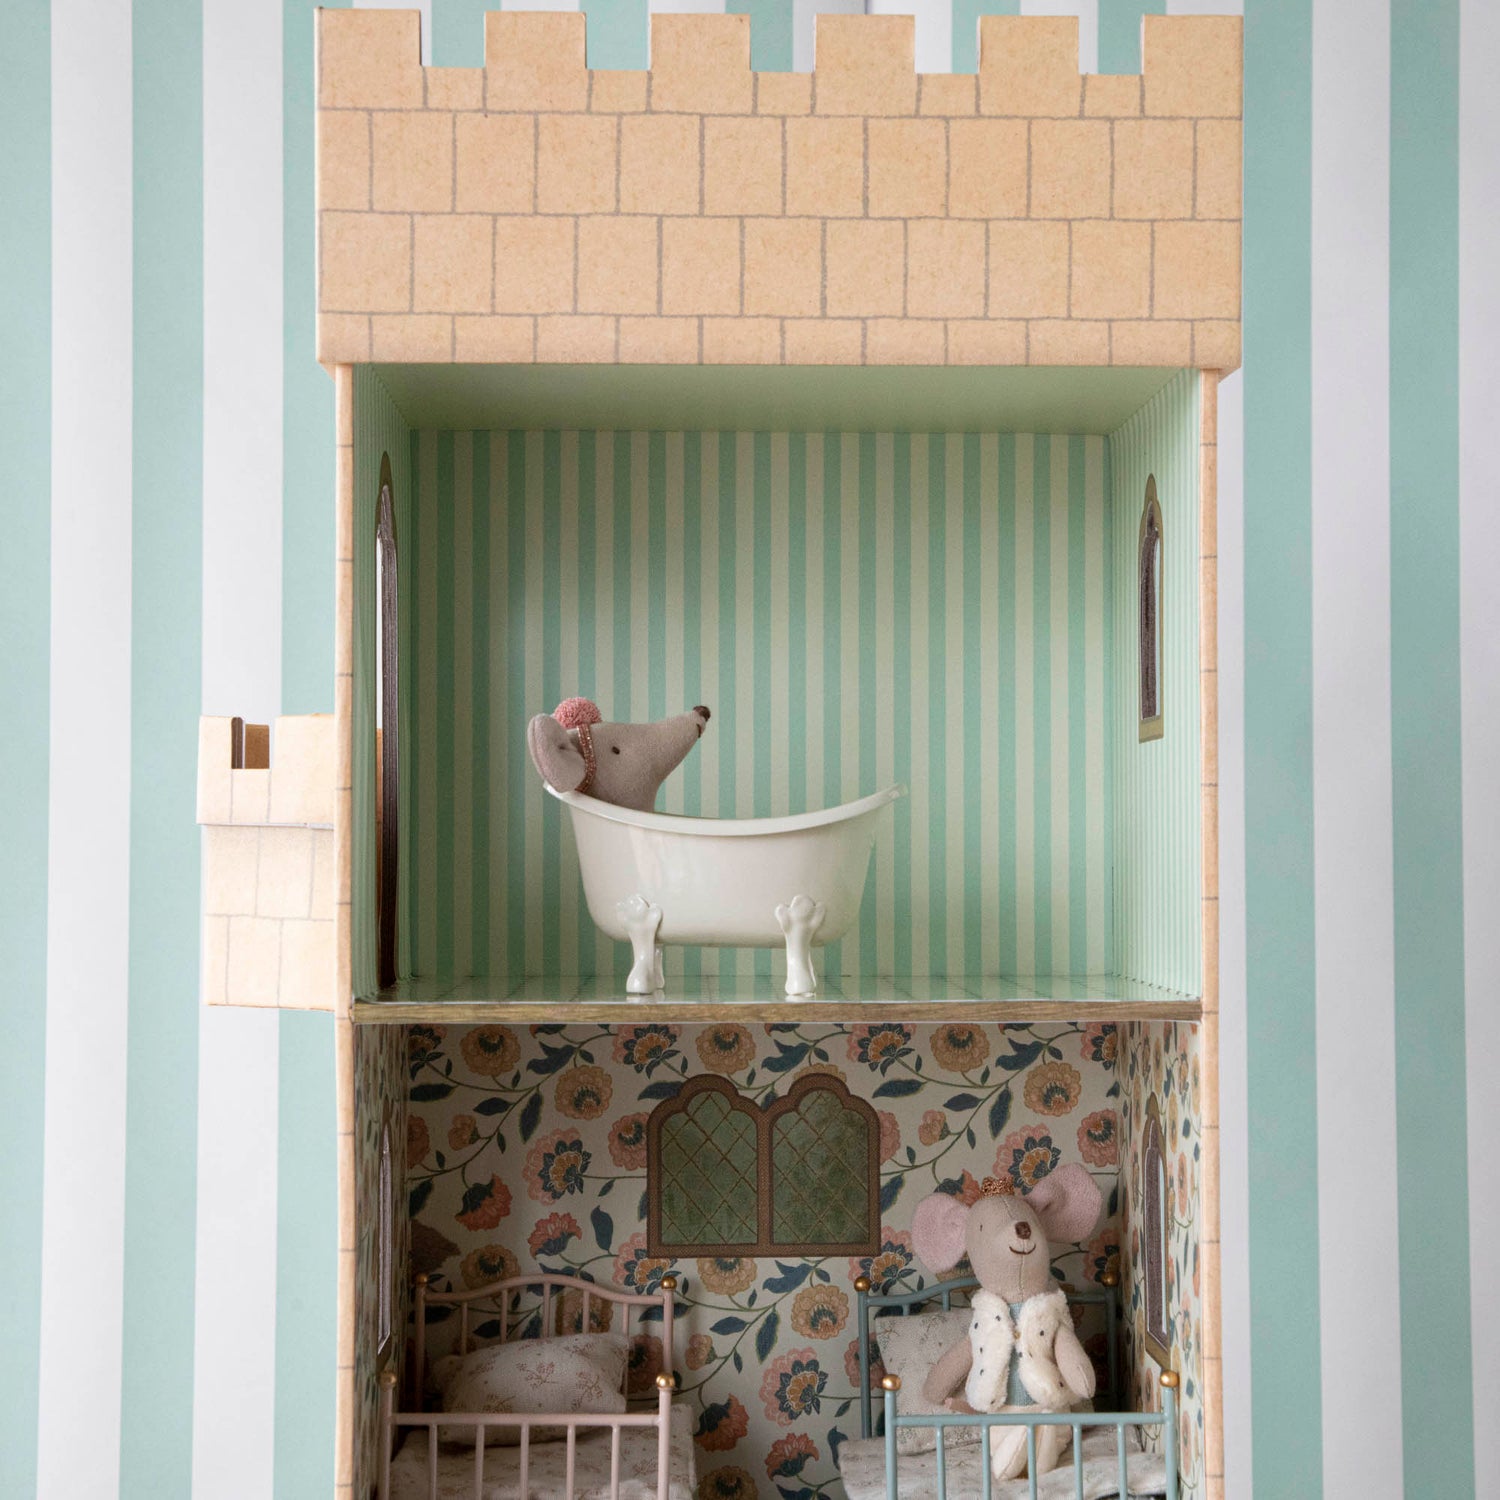 A doll house with a Mouse Bathtub in a vintage bath tub by Maileg.